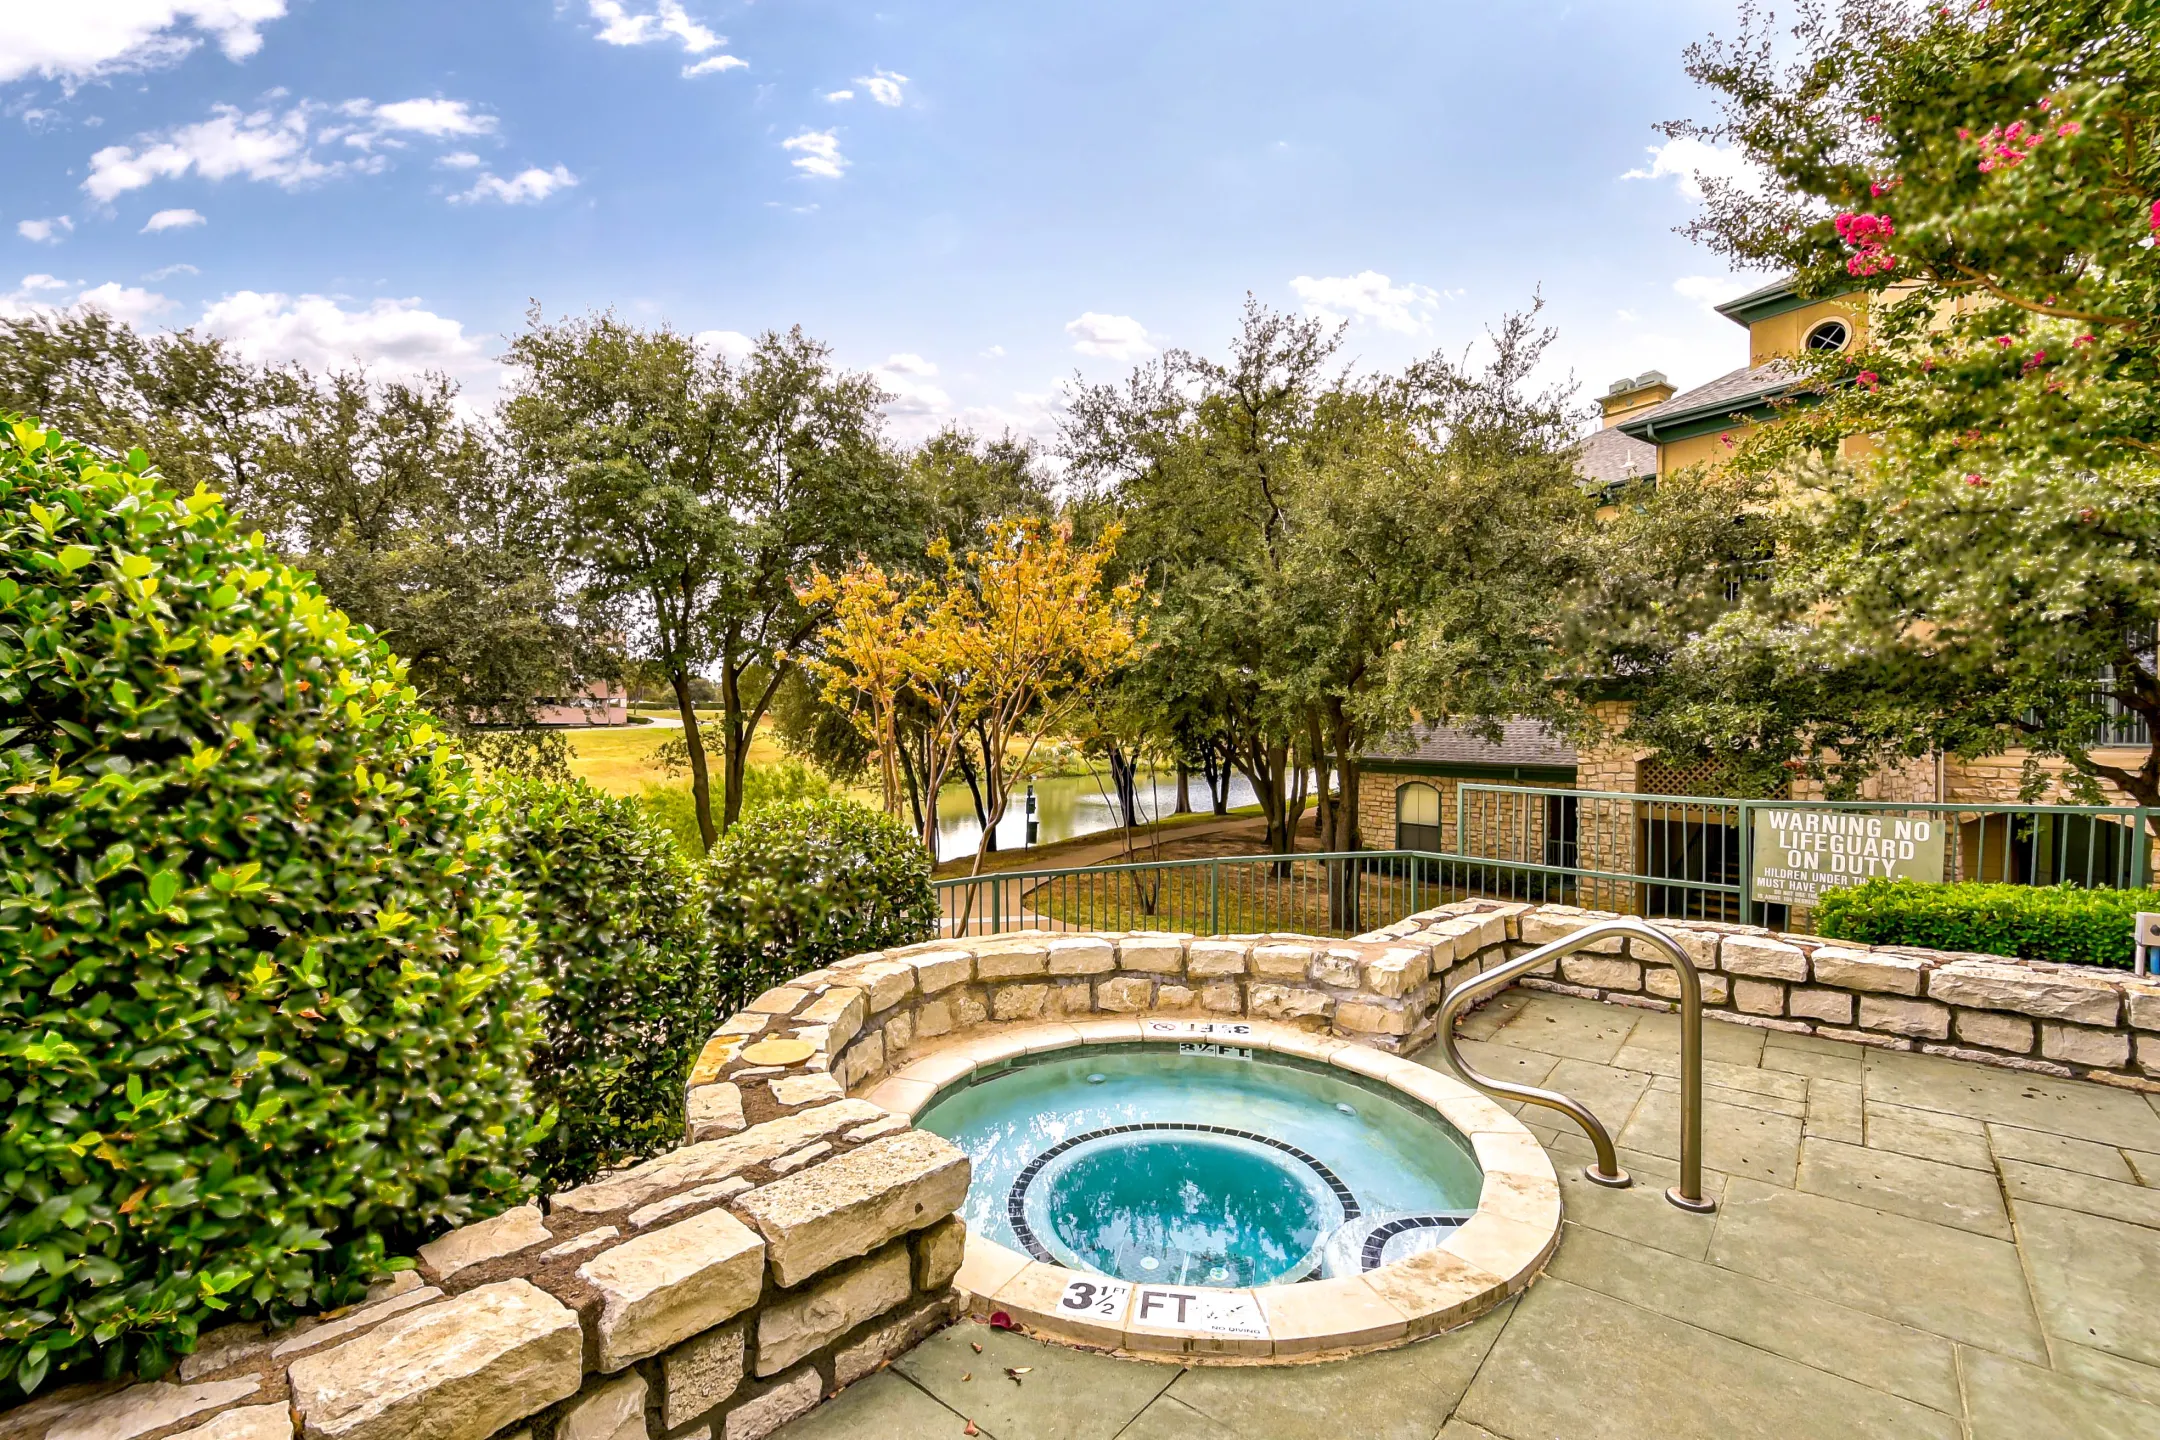 Pool - The Villas At Beaver Creek - Irving, TX